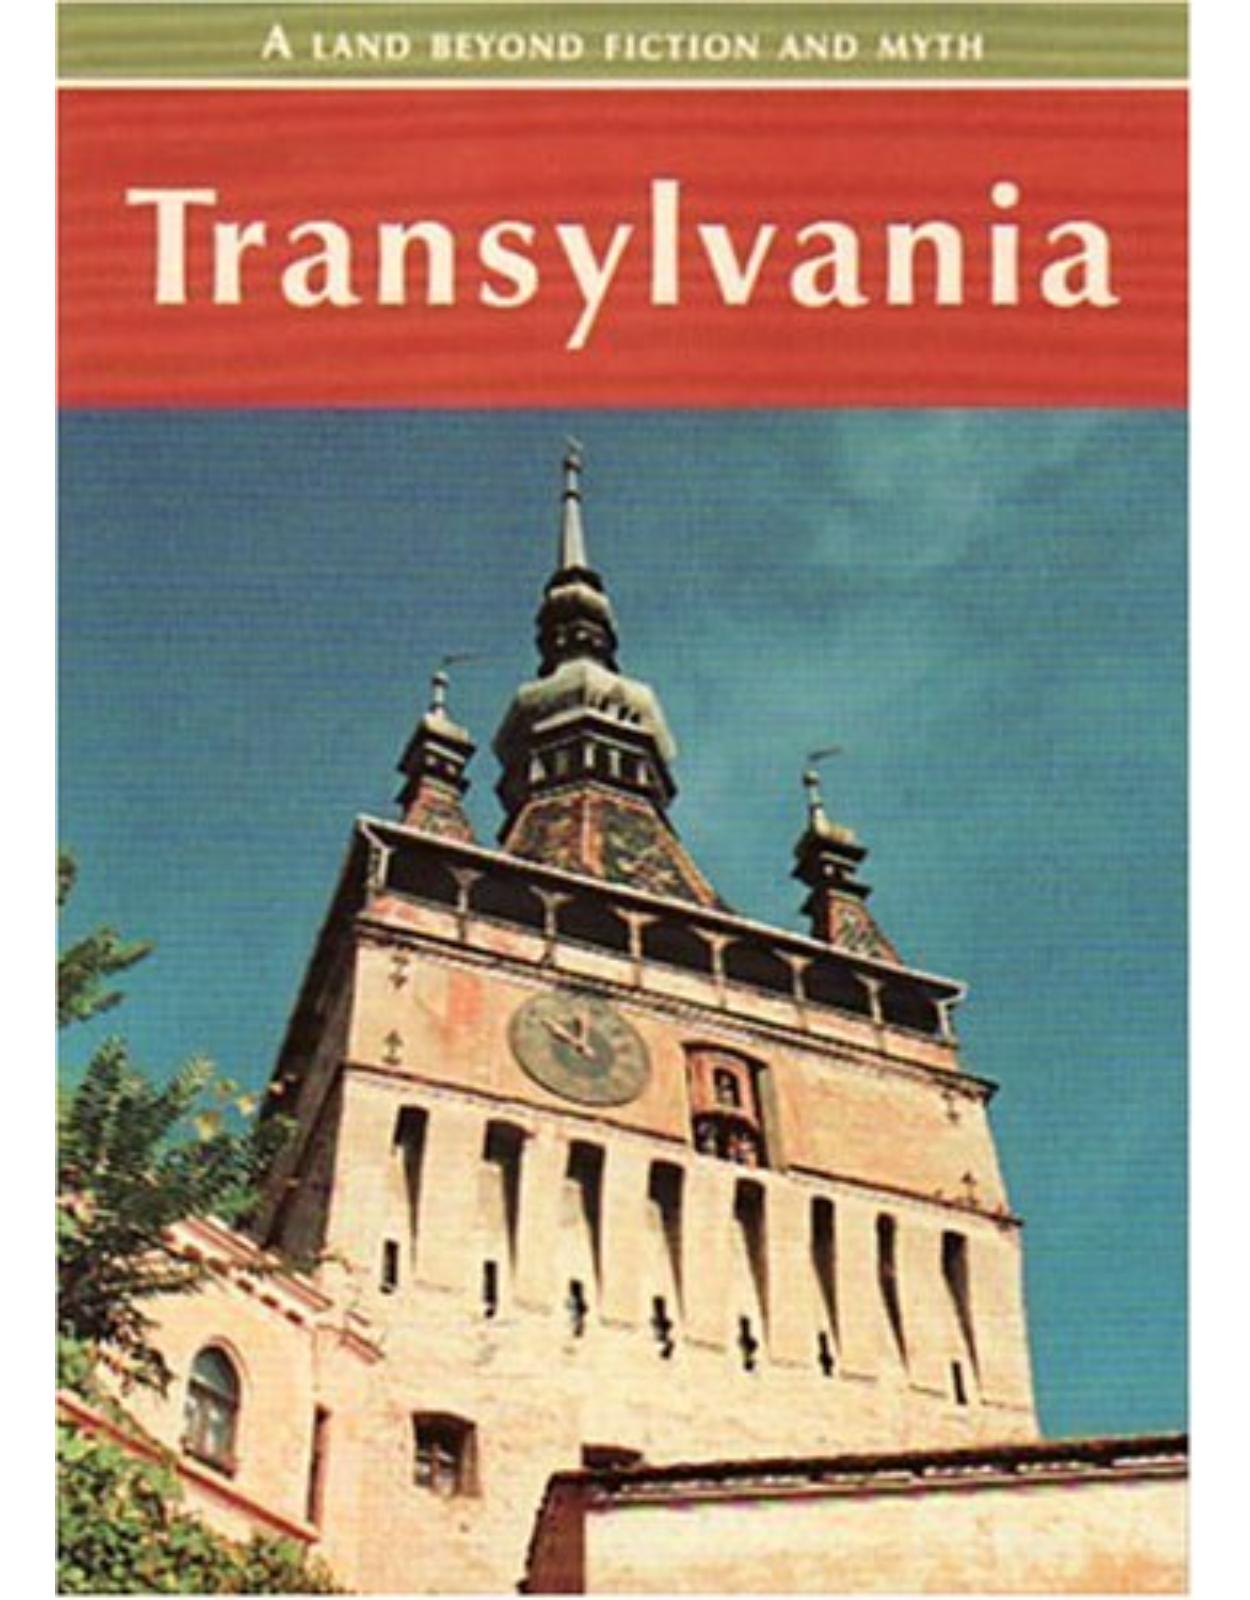 Transylvania: A land beyond fiction and myth